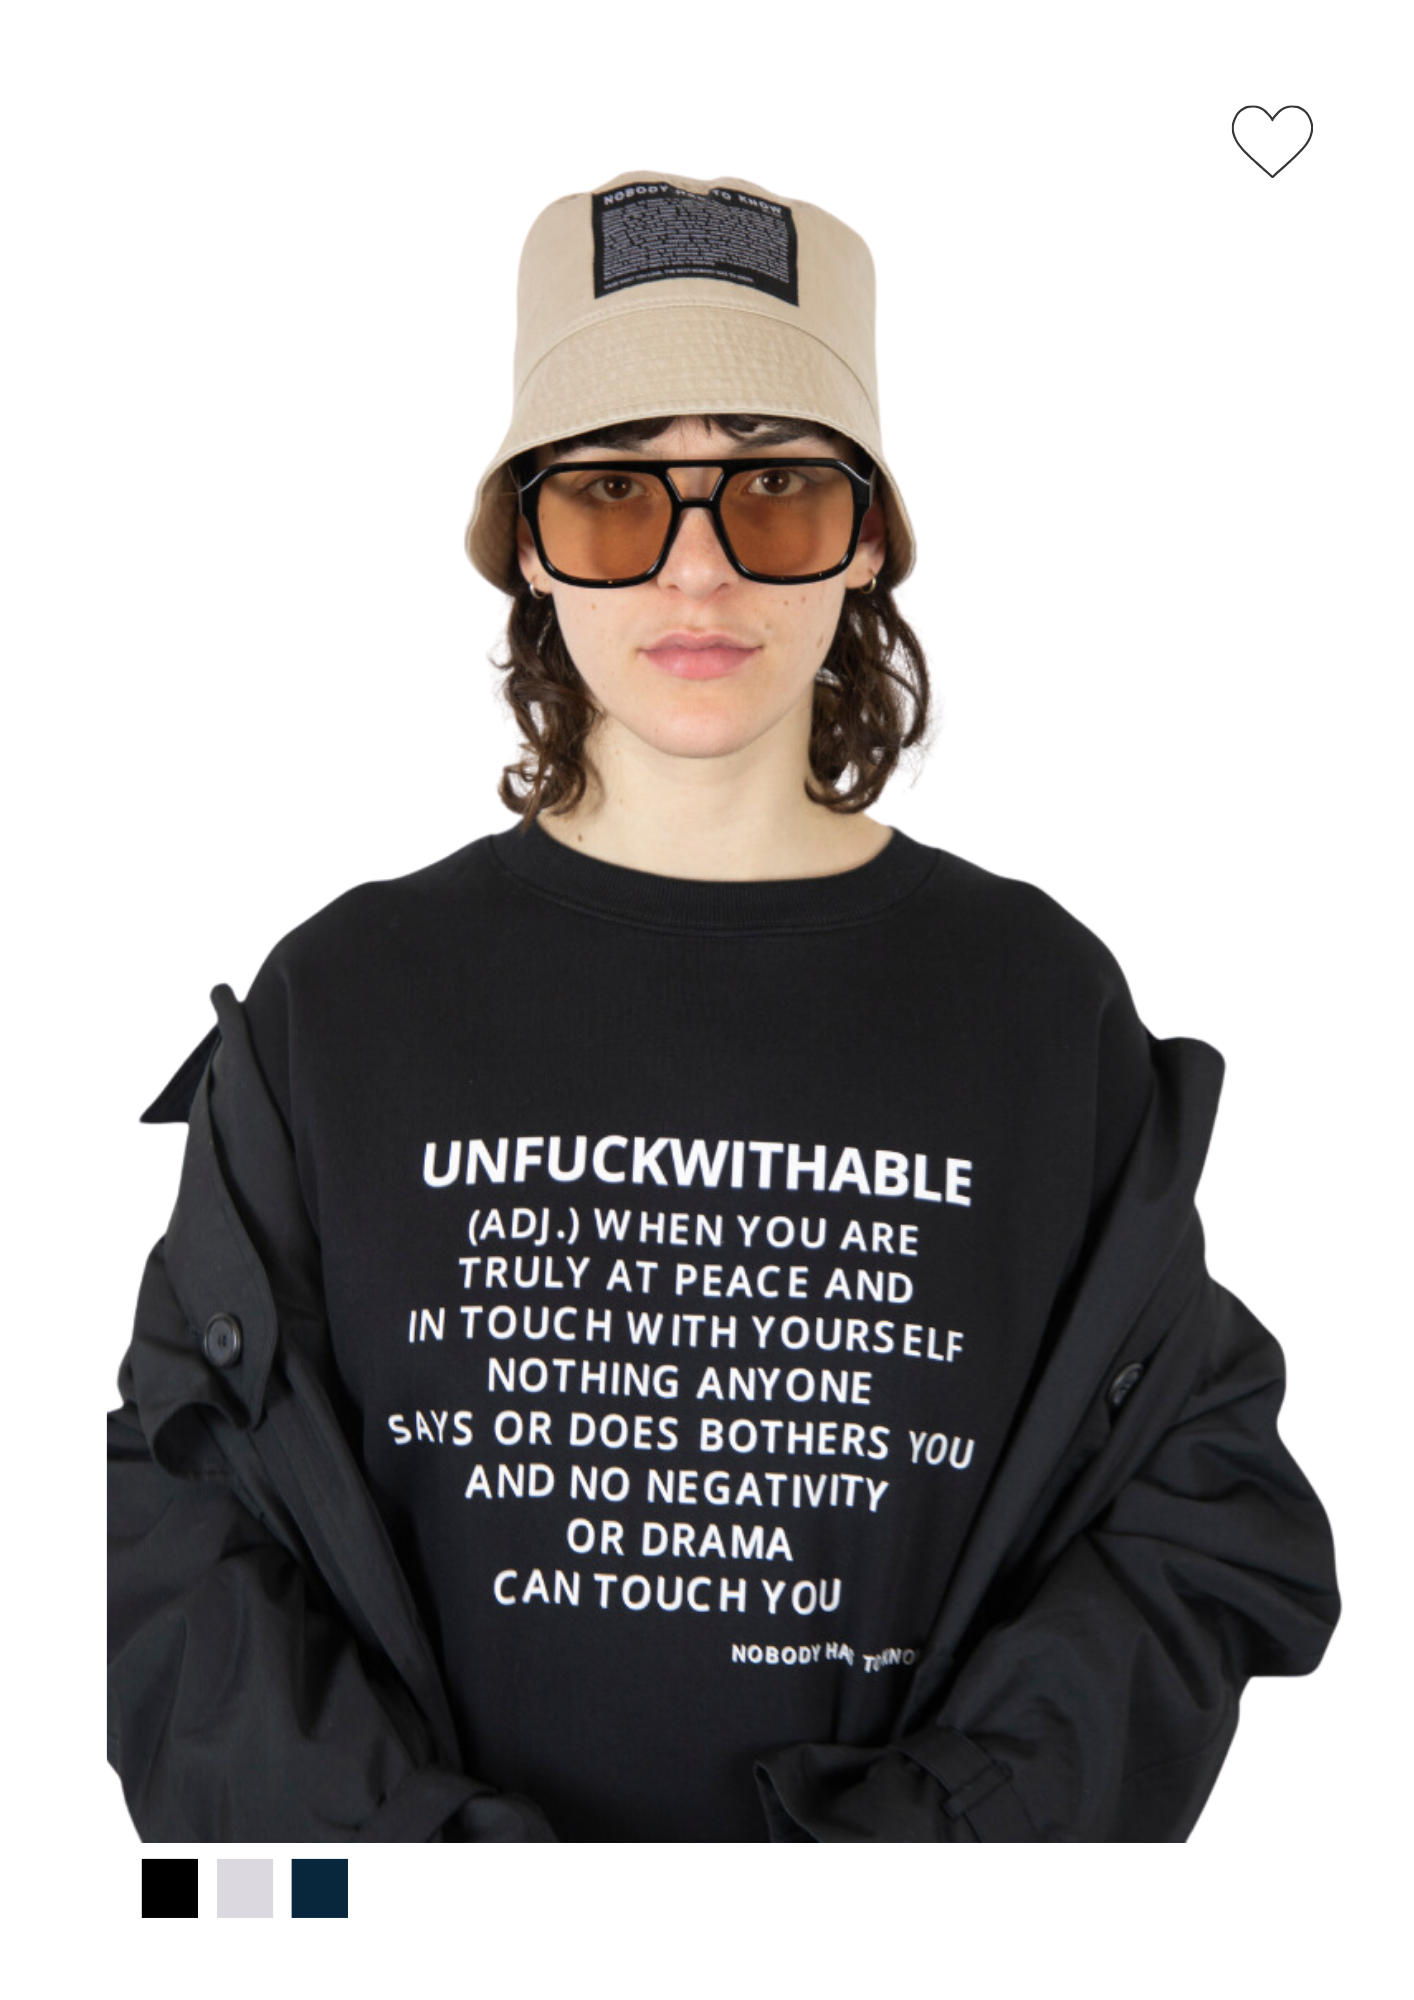 Unfuckwithable (E) - sweater